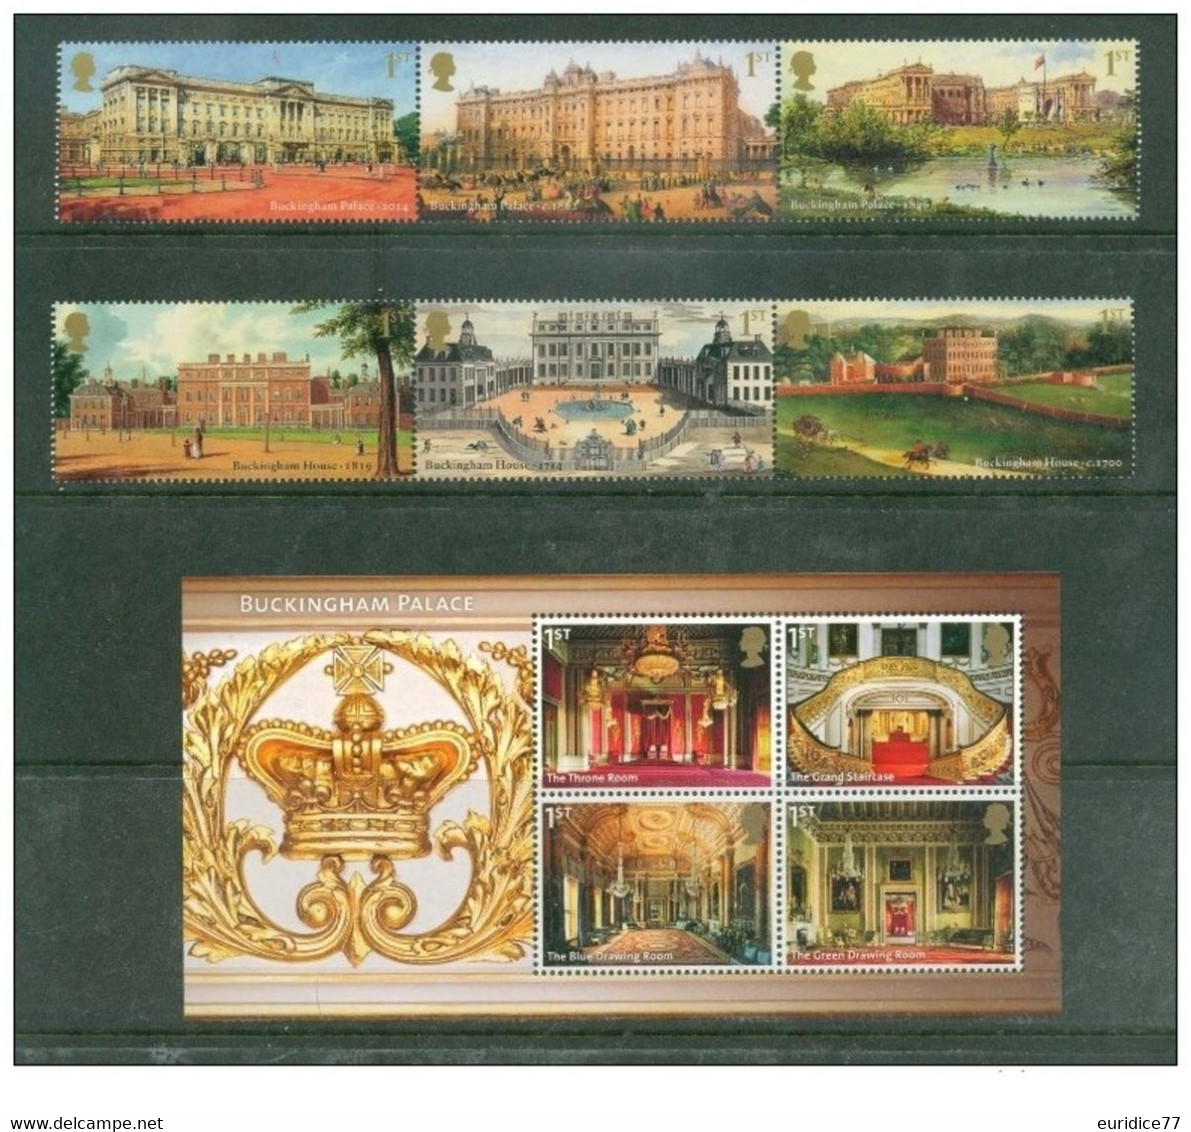 Great Britain 2014 - Buckingham Palace Stamp Set + Souvenir Sheet Mnh - Sheets, Plate Blocks & Multiples